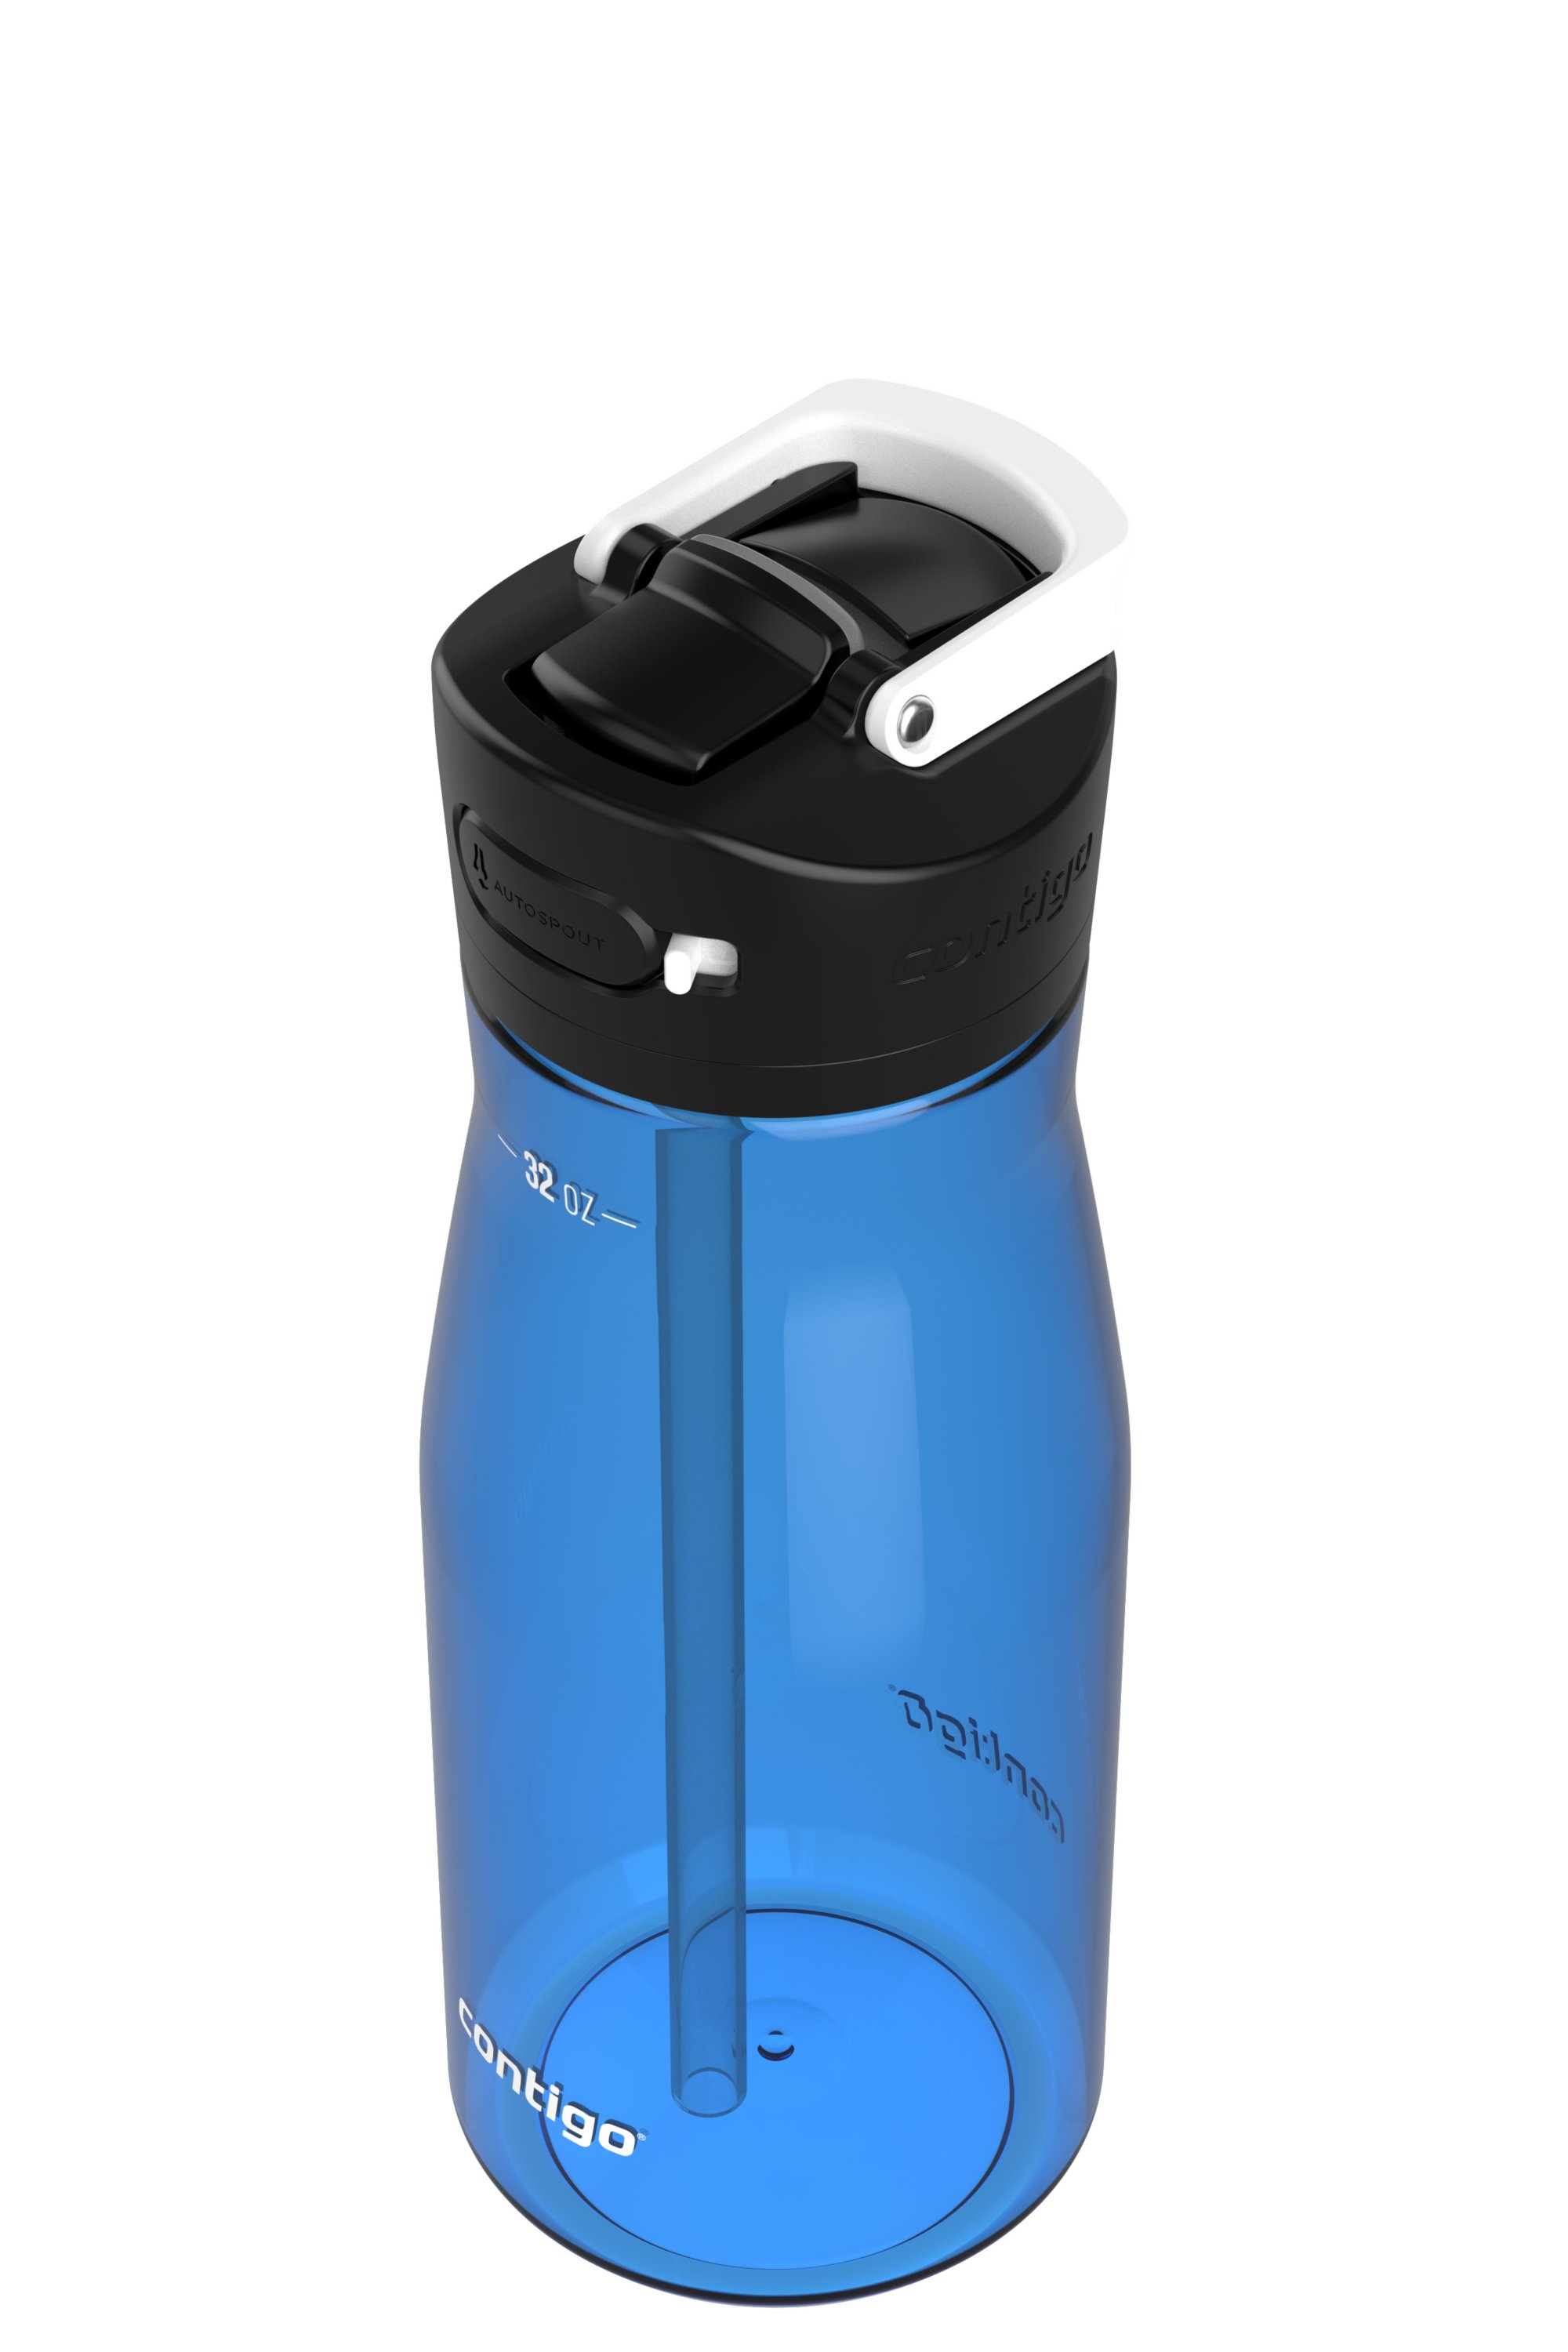 Contigo Ashland Chill 2.0 Stainless Steel Water Bottle, 32 oz - Stainless